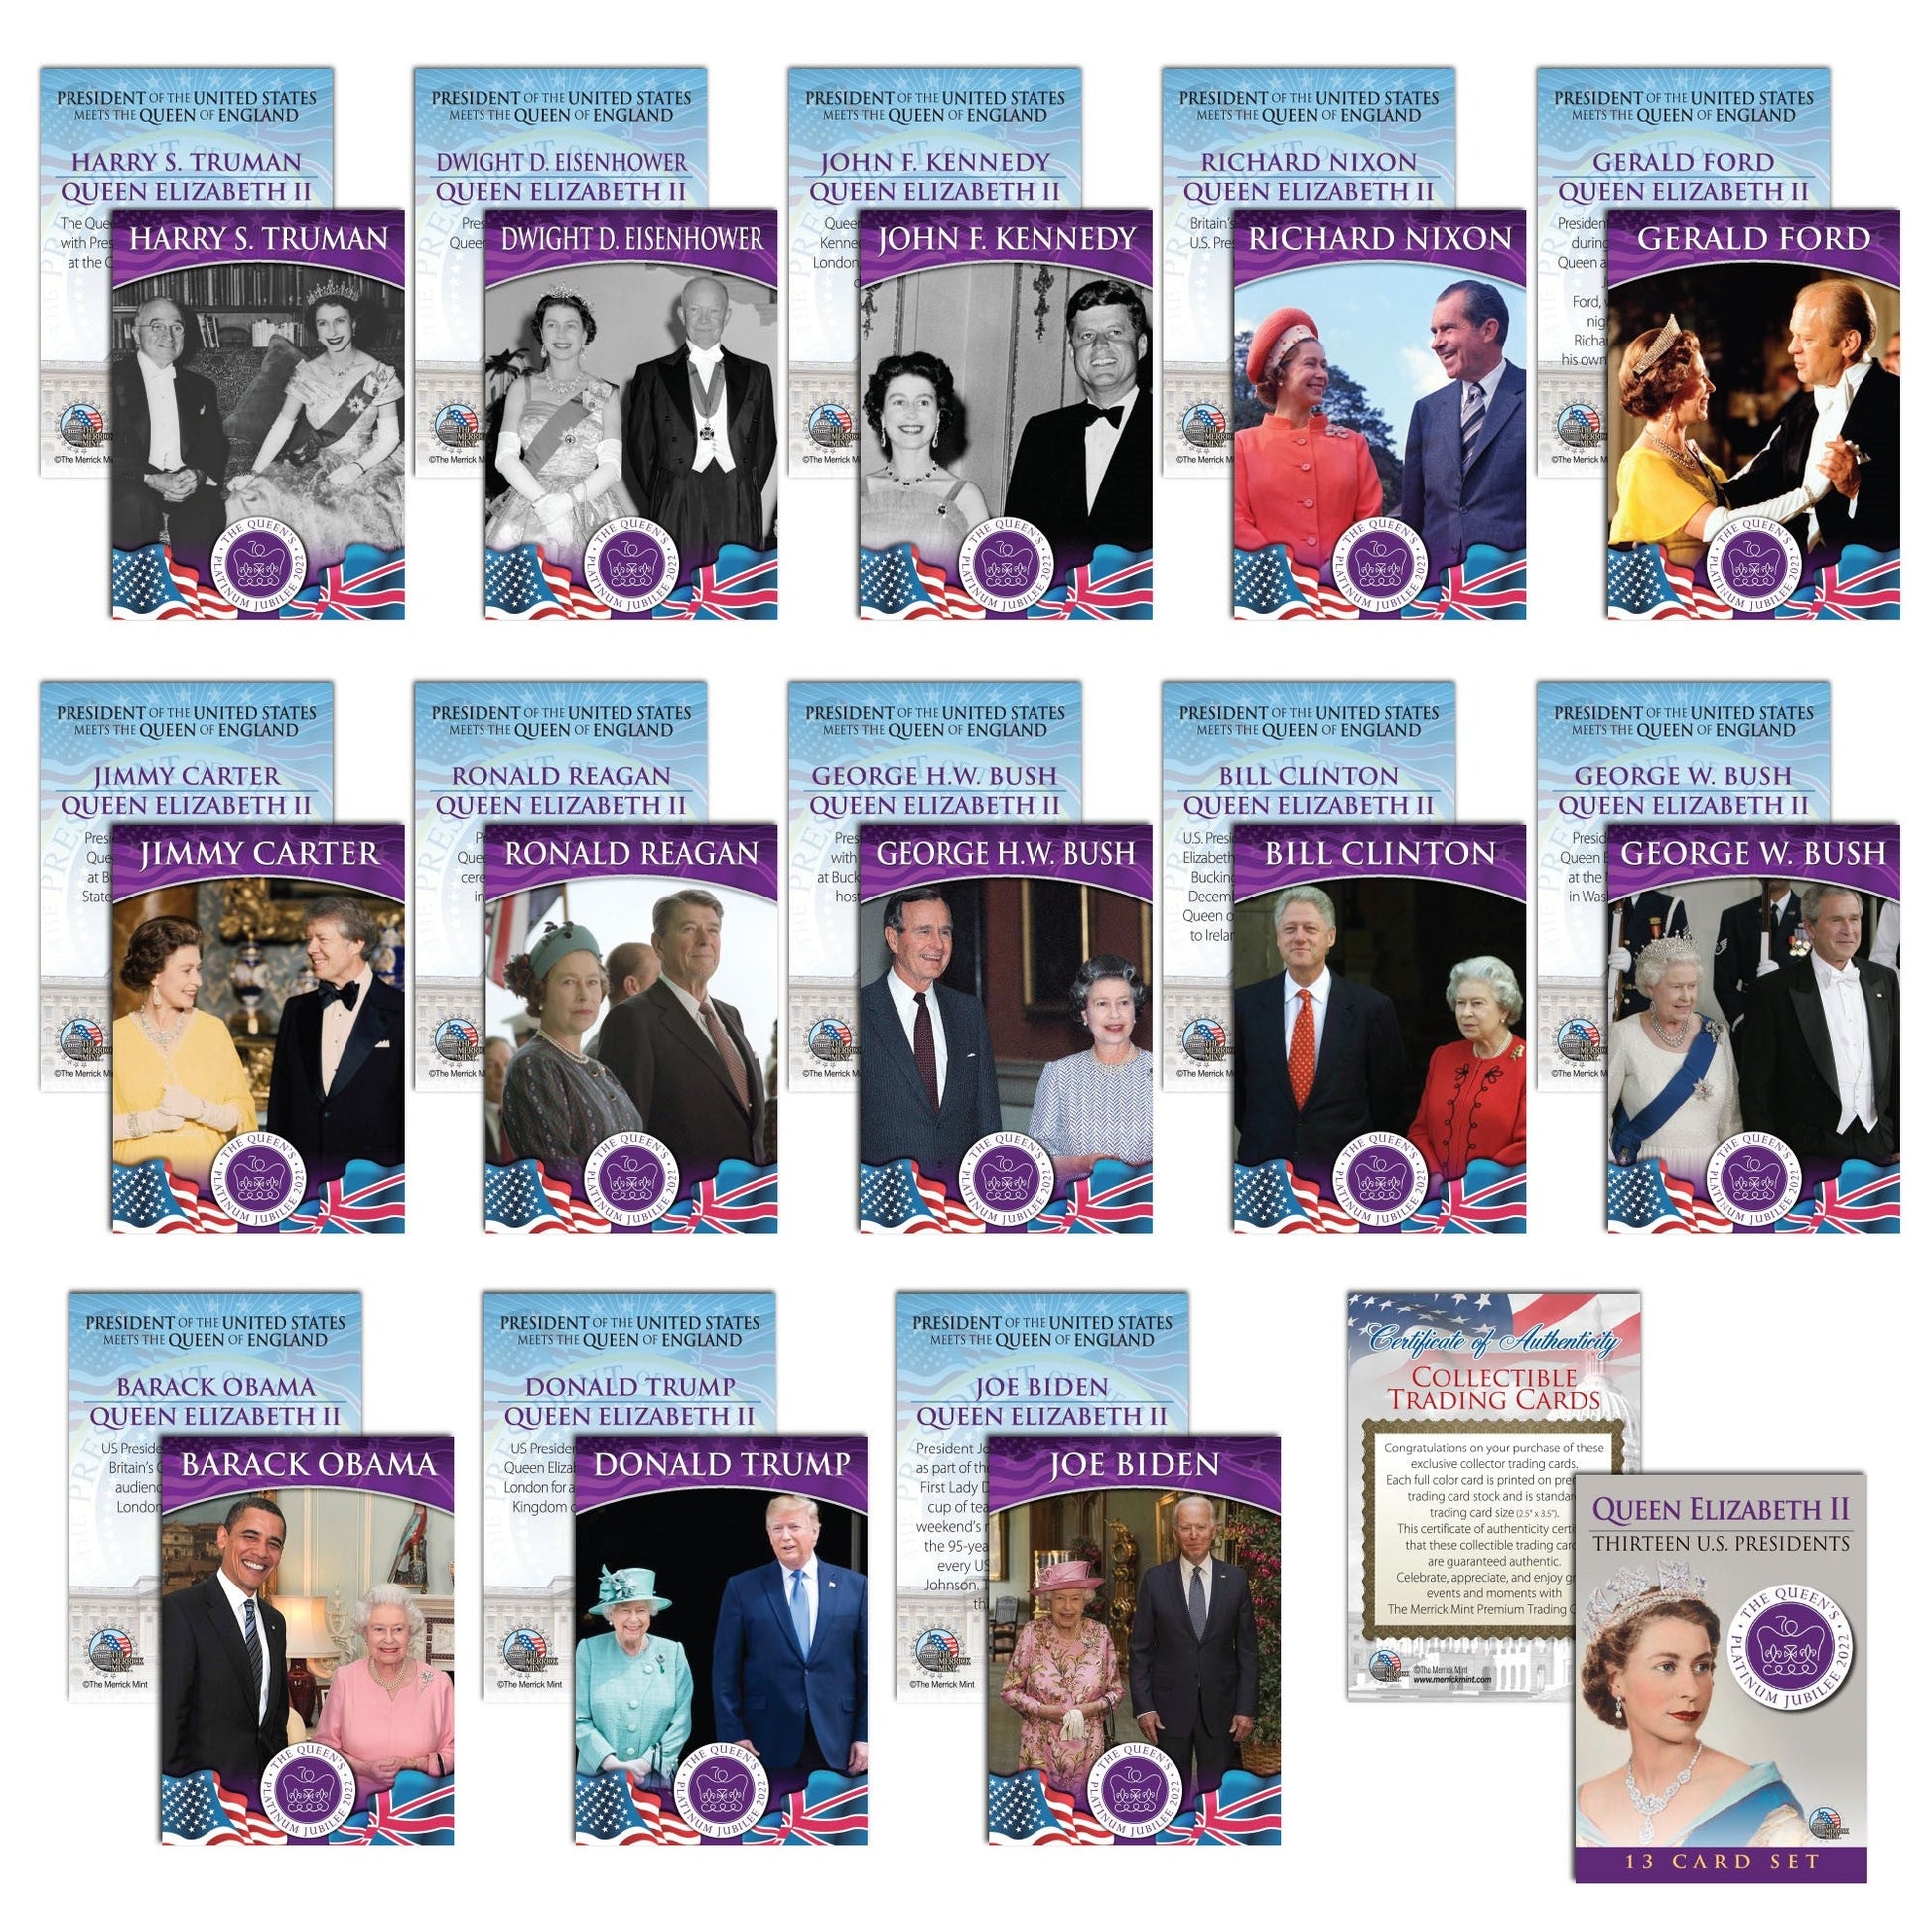 Premium commemorative 13-Card Set featuring Queen Elizabeth II meeting with 13-US presidents - Proud Patriots